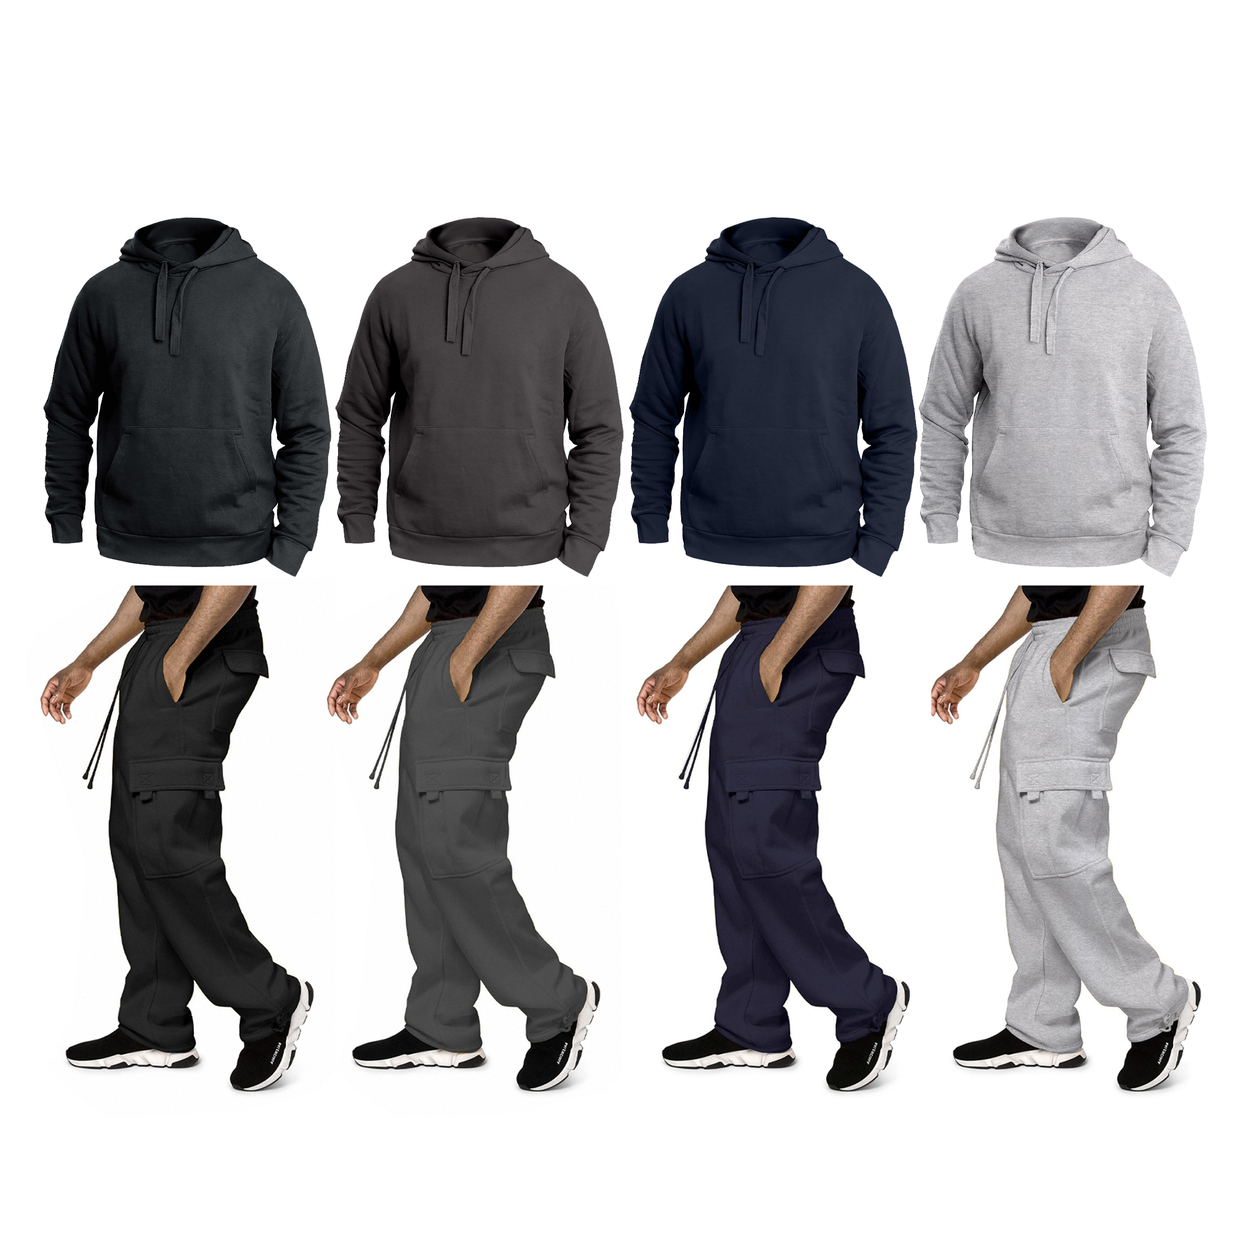 Men's Big & Tall Winter Warm Cozy Athletic Fleece Lined Multi-Pocket Cargo Sweatsuit - Black, Small